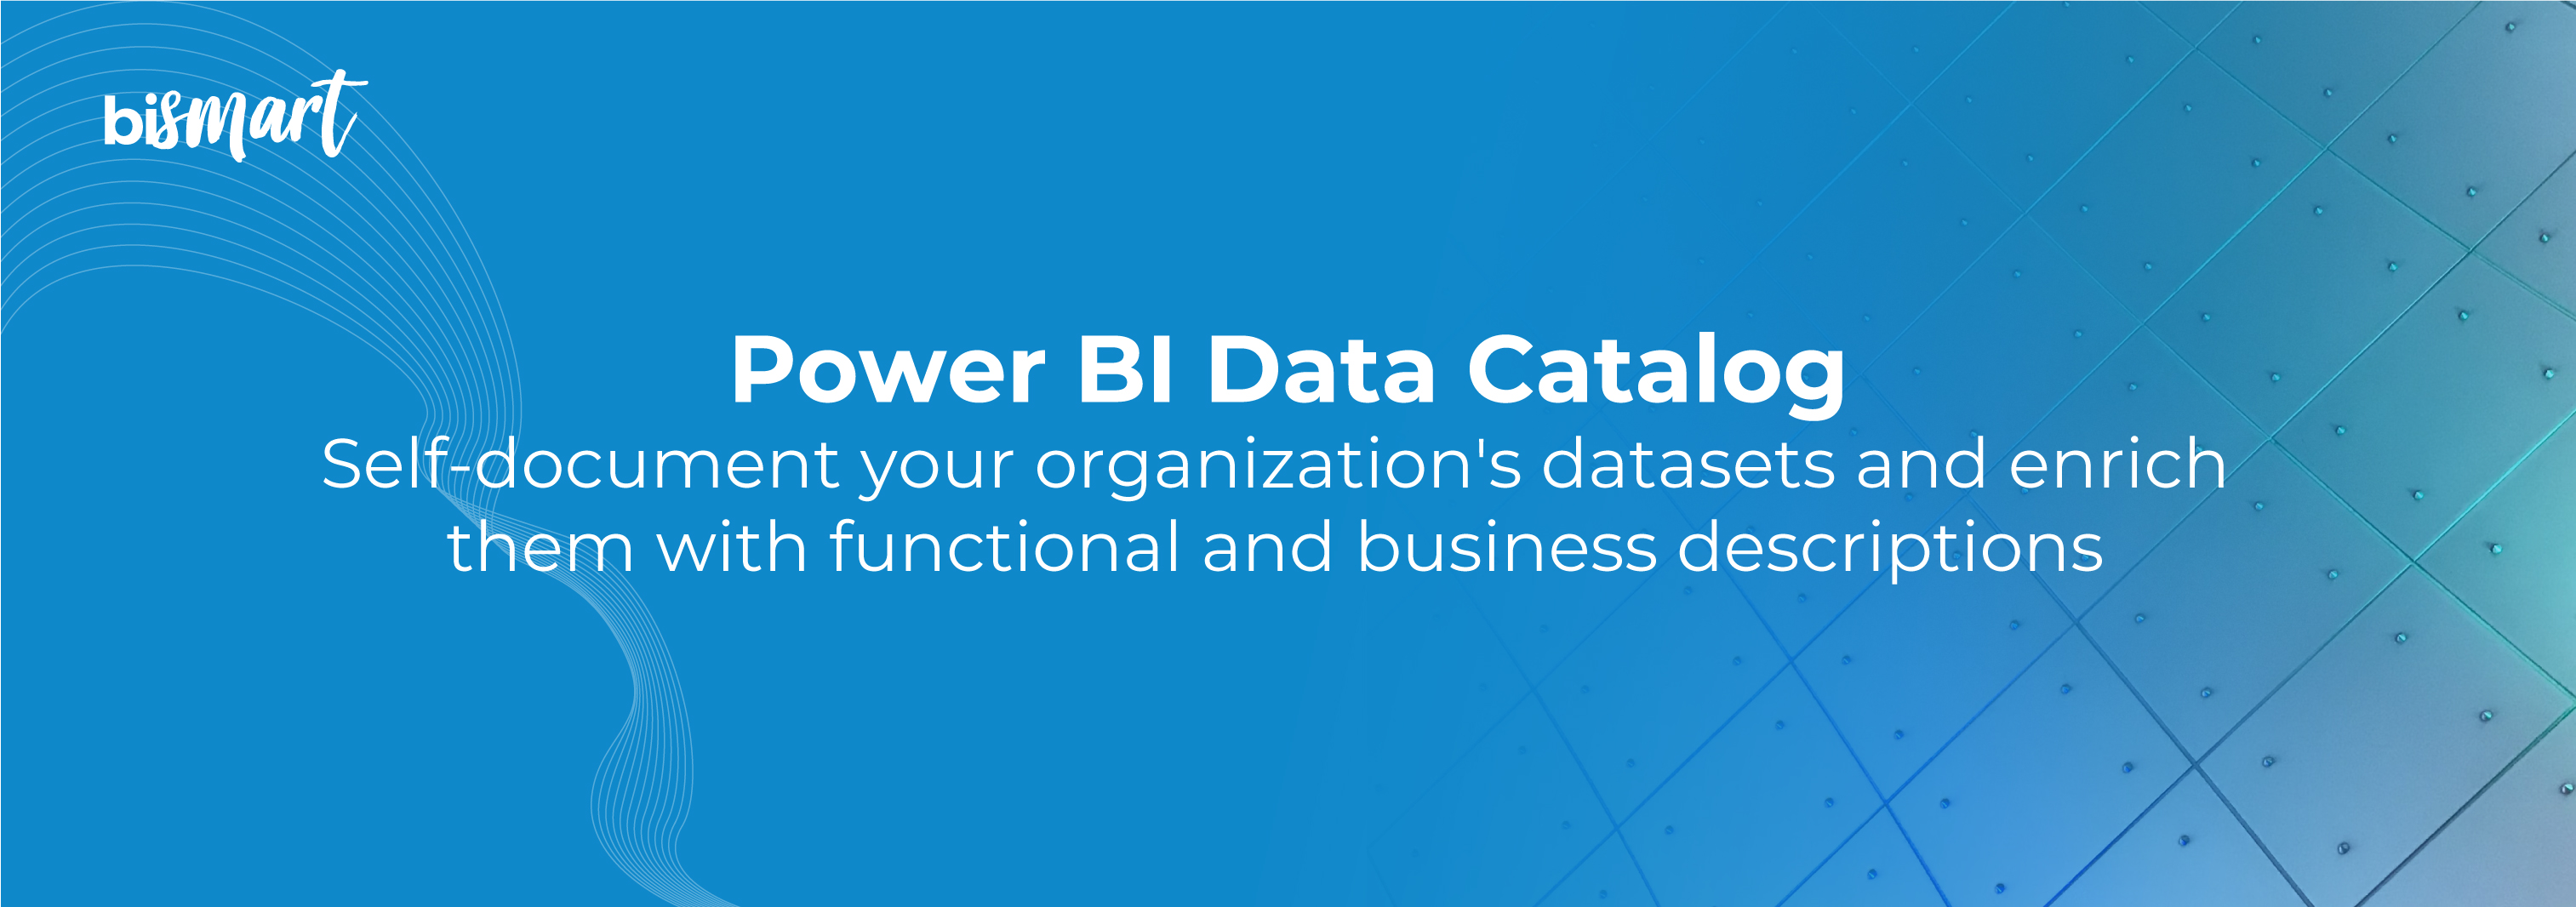 PowerBI-Data-Catalog-banner-EN